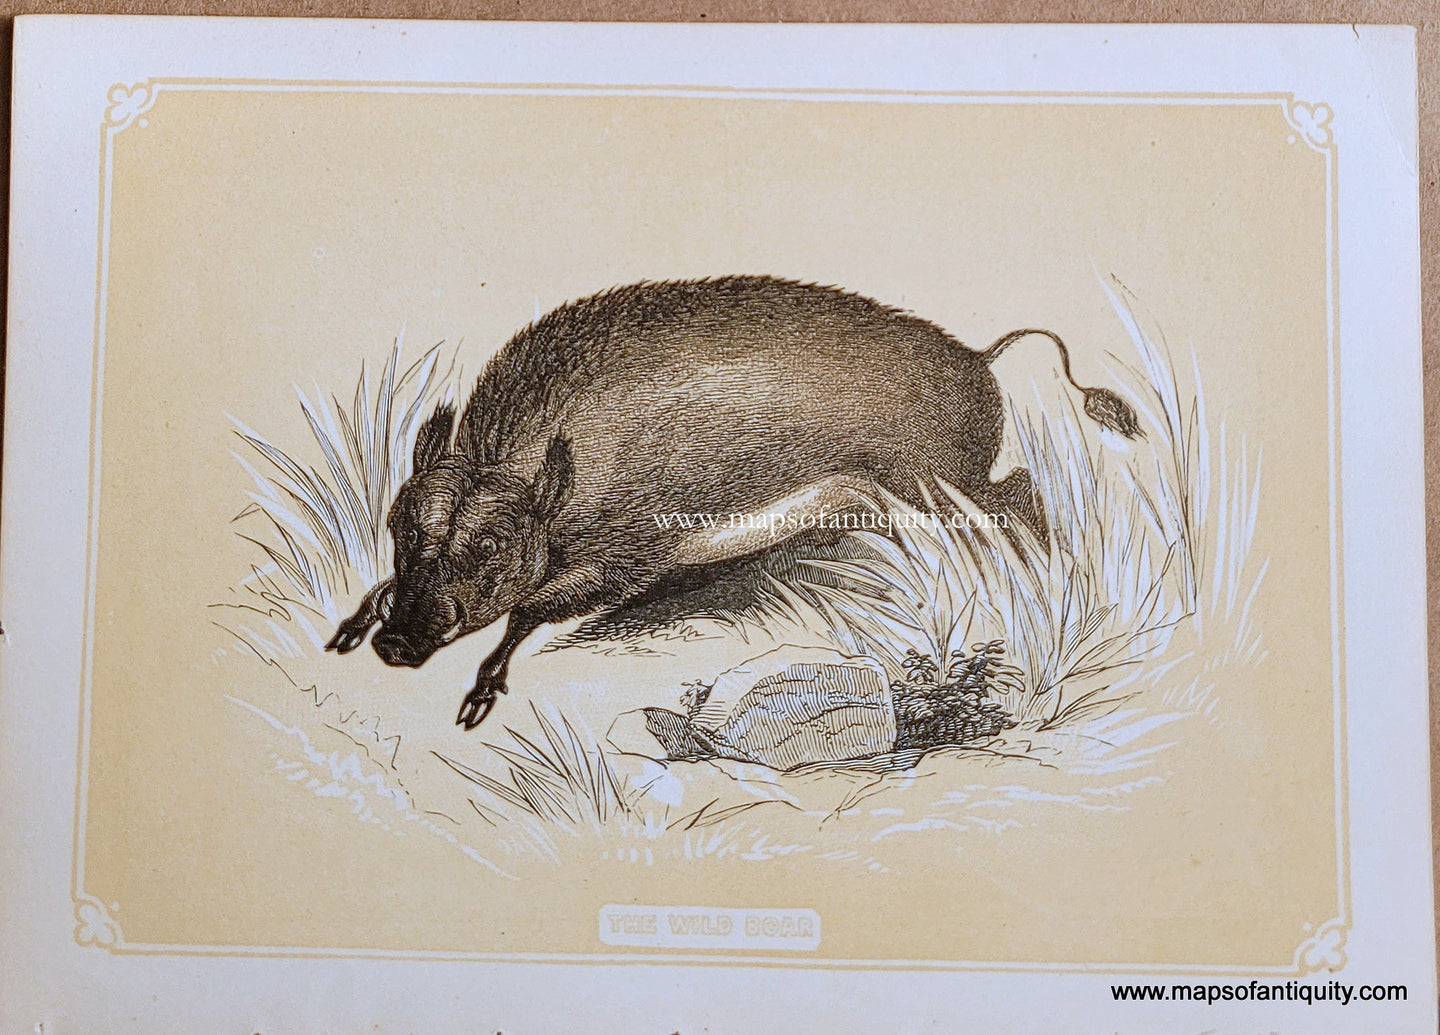 Genuine-Antique-Print-The-Wild-Boar-1850s-Tallis-Maps-Of-Antiquity